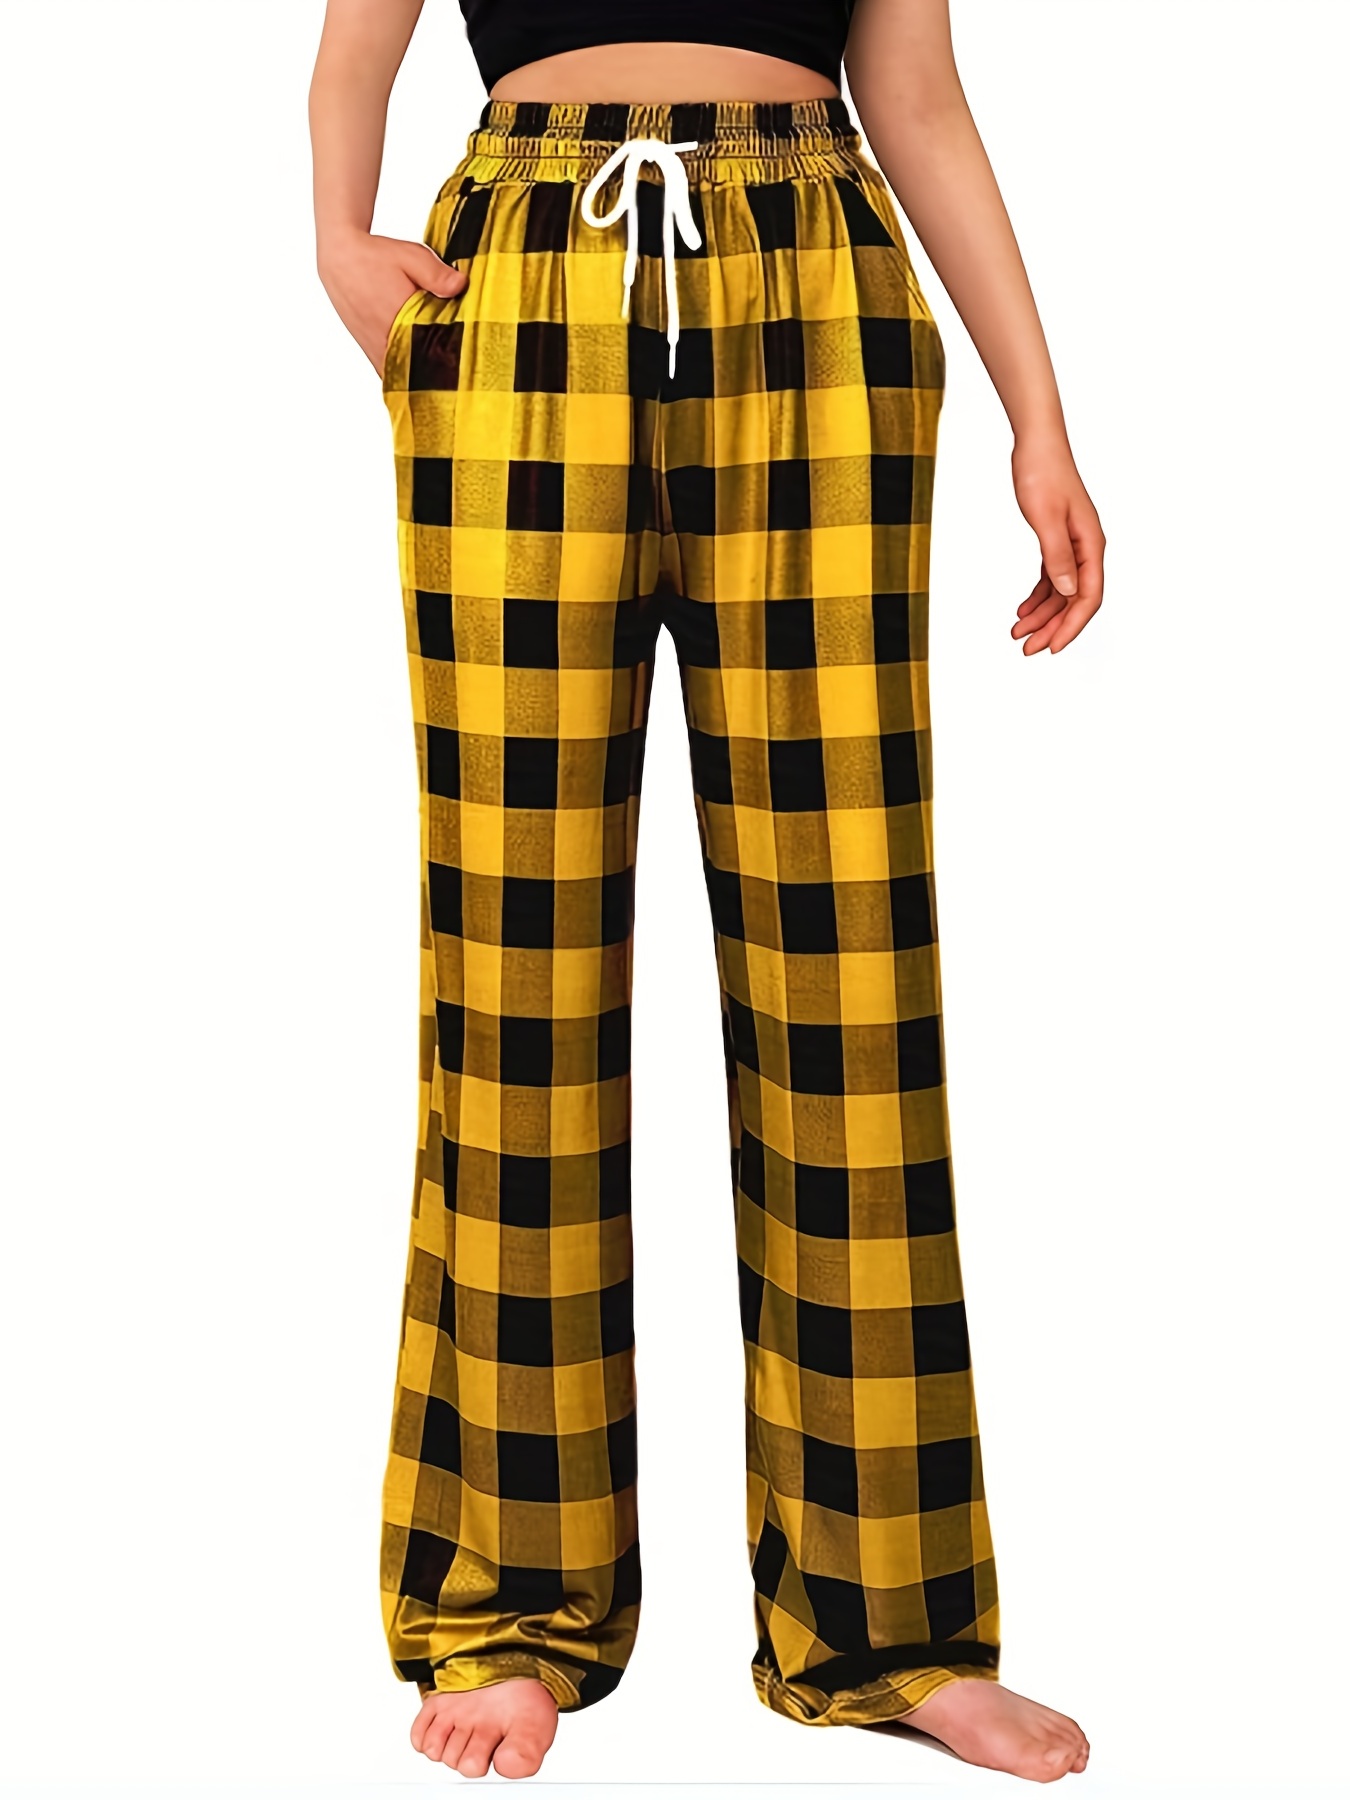 Orange & White Striped Lounge Pants Pajamas / Women's Casual Loungewear -   Canada